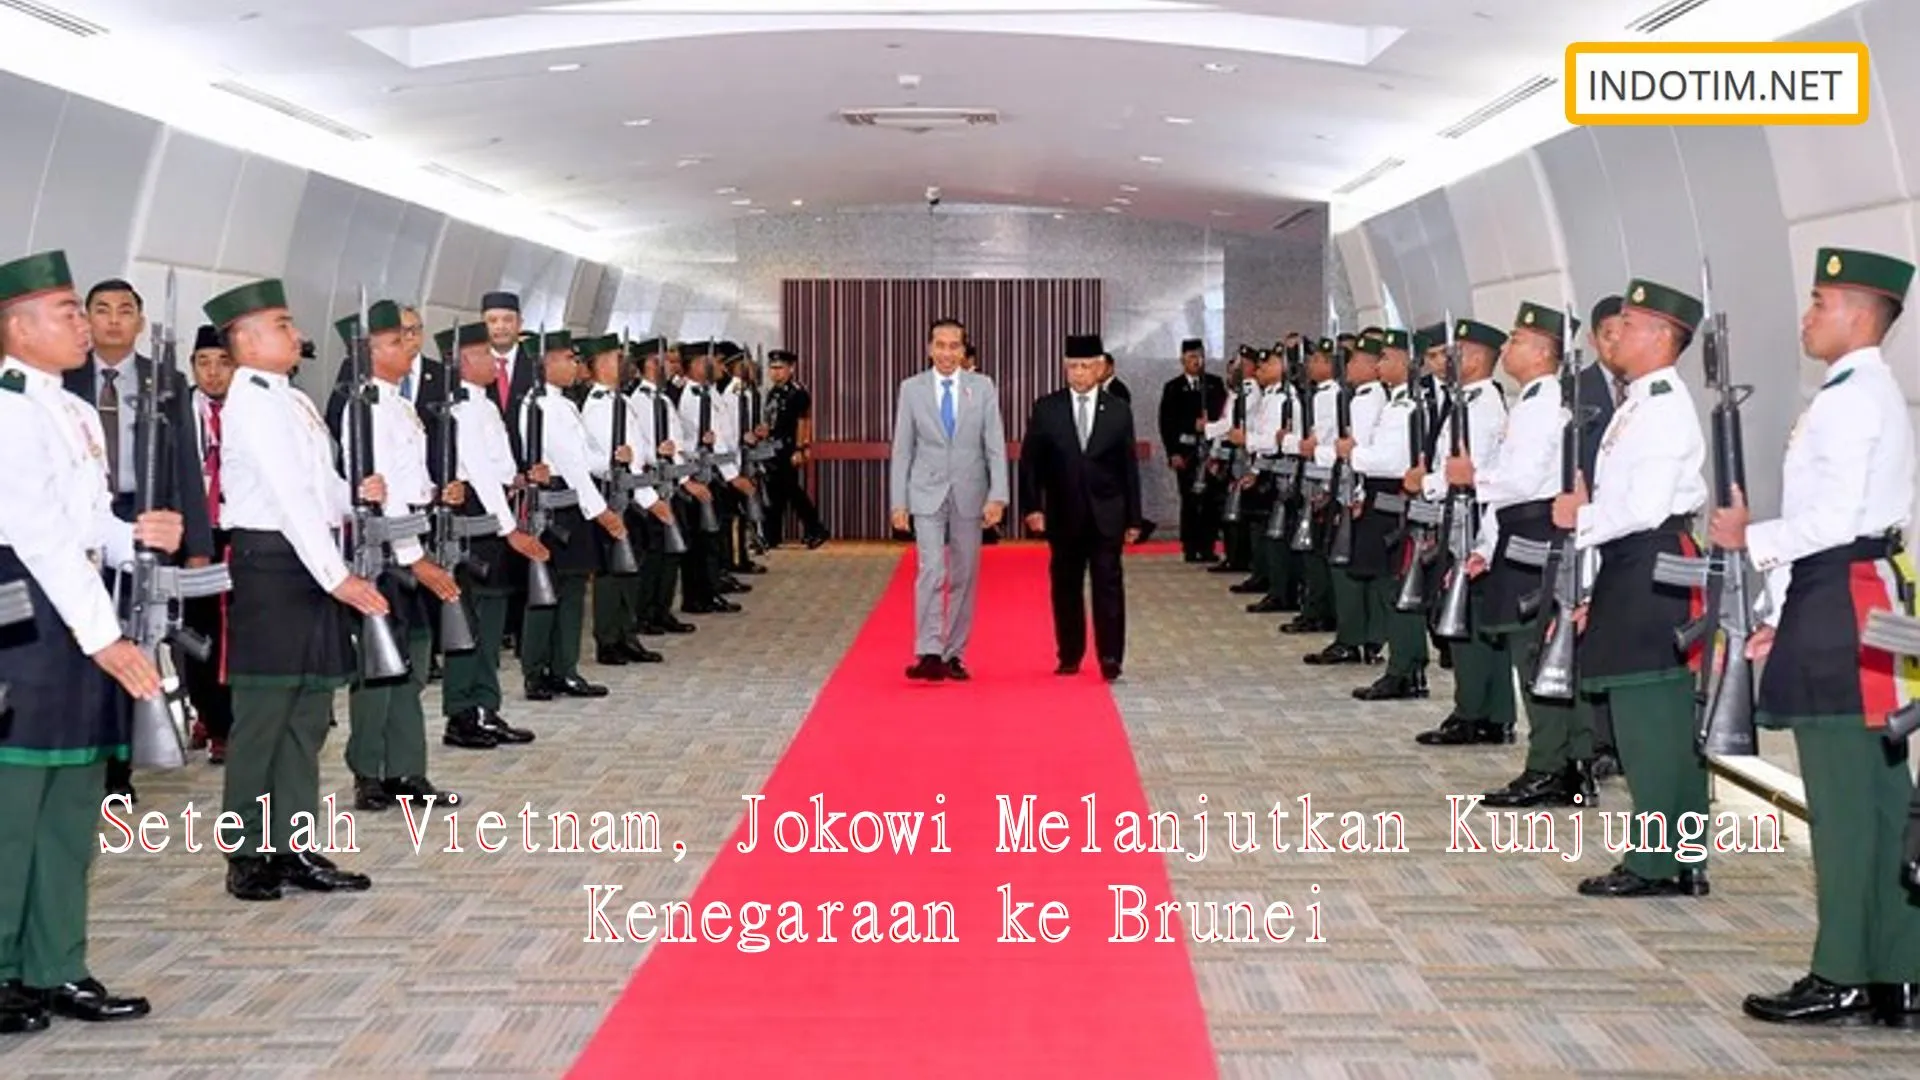 Setelah Vietnam, Jokowi Melanjutkan Kunjungan Kenegaraan ke Brunei